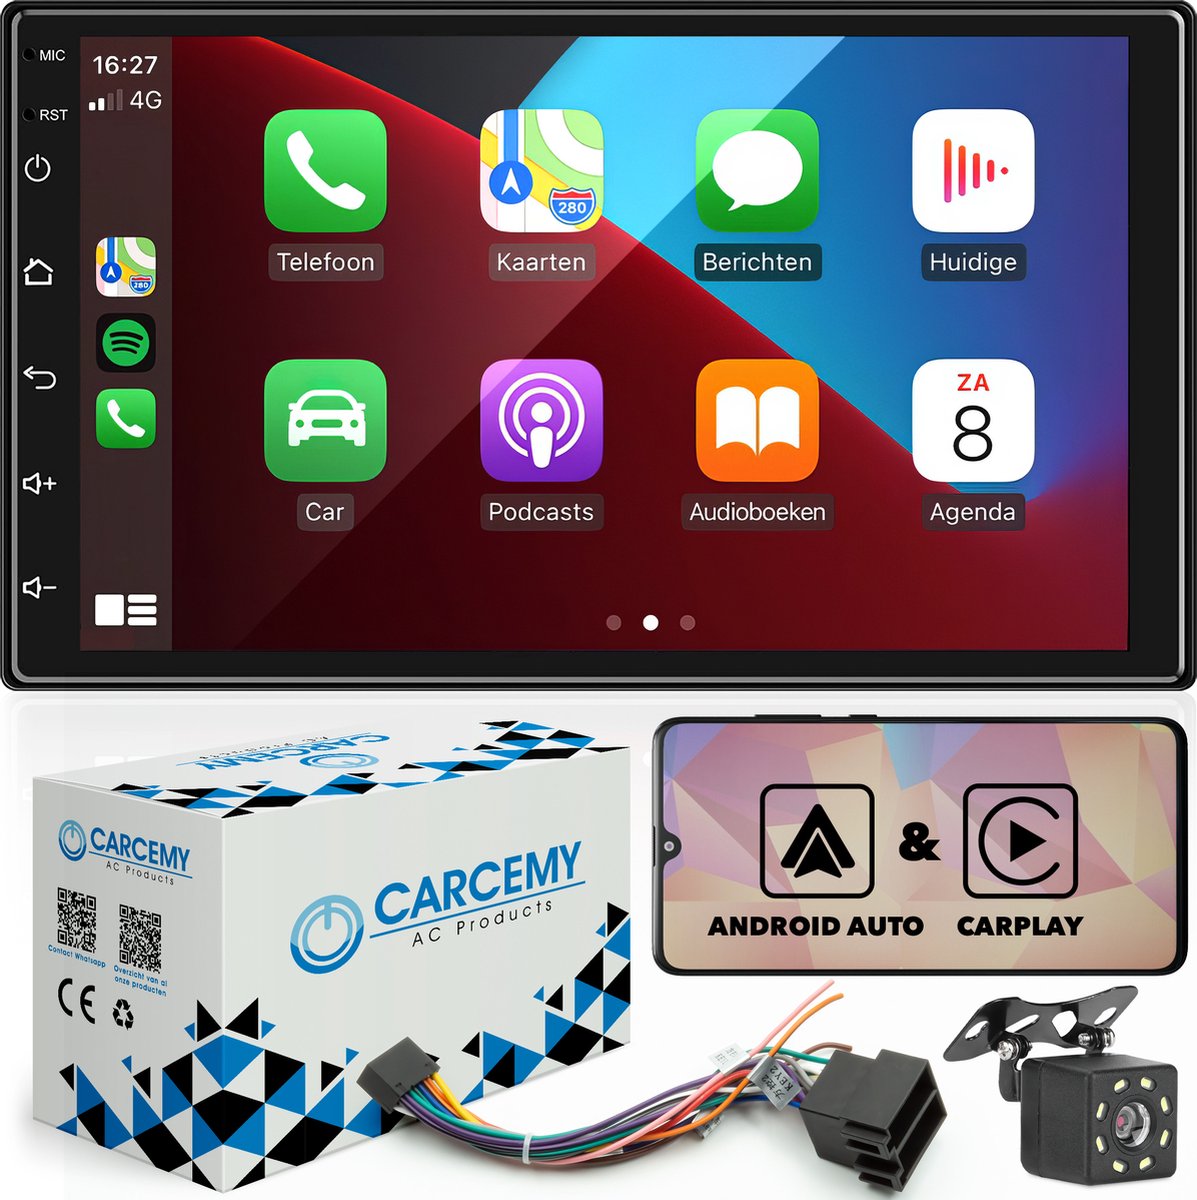 Auto Rádio 6,2 Ecrã Táctil Clear Type Bluetooth/USB/AUX Android - Pioneer